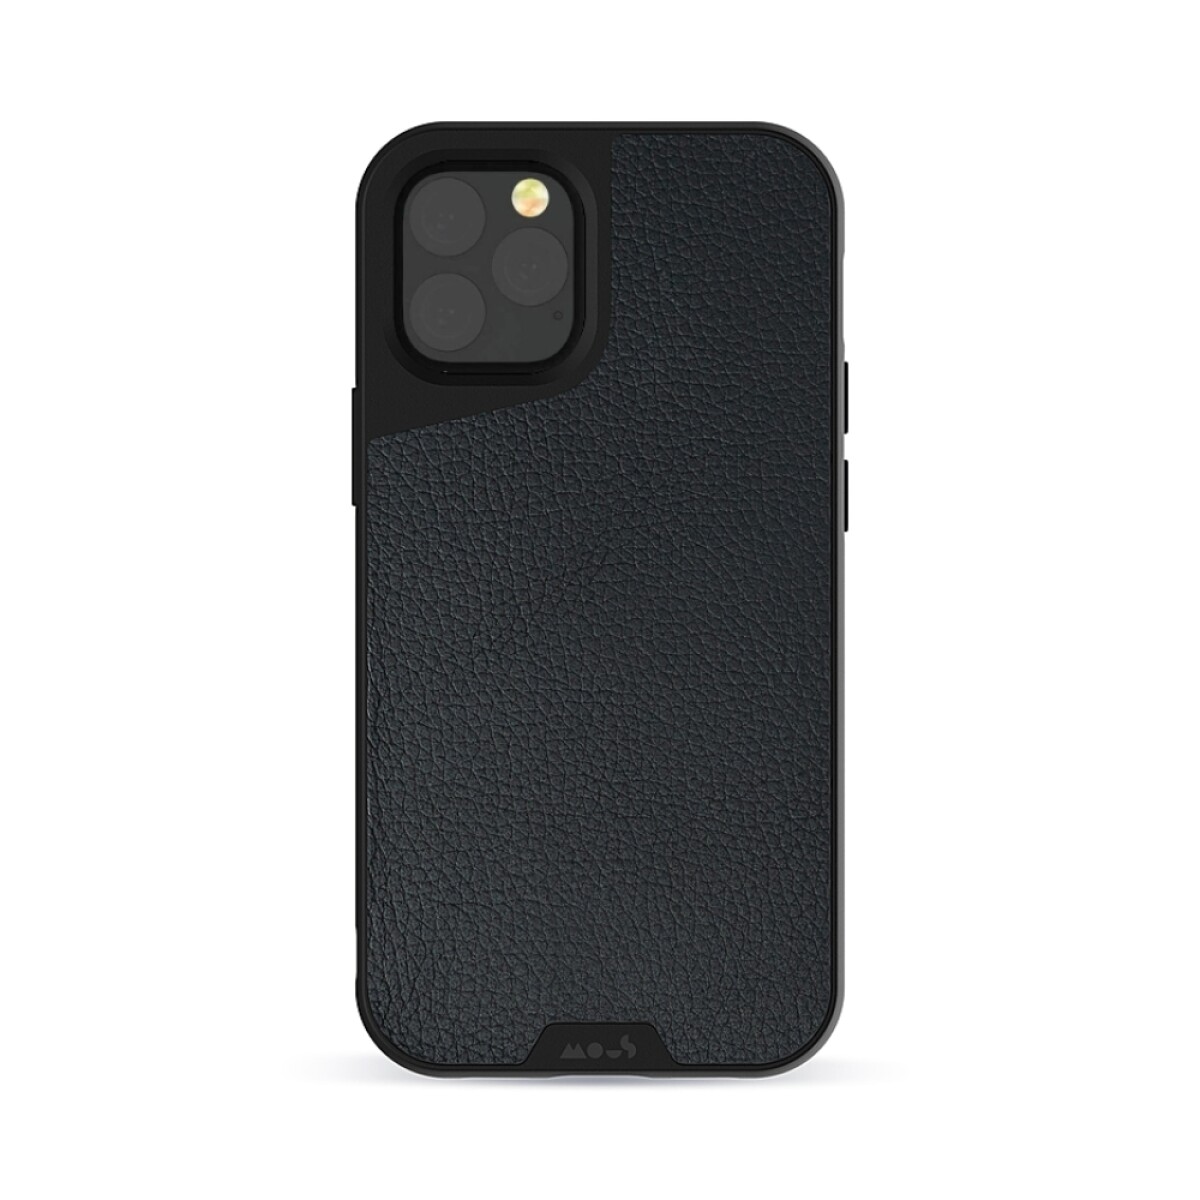 Mous case limitless 3.0 iphone 12 pro max - Cuero negro 